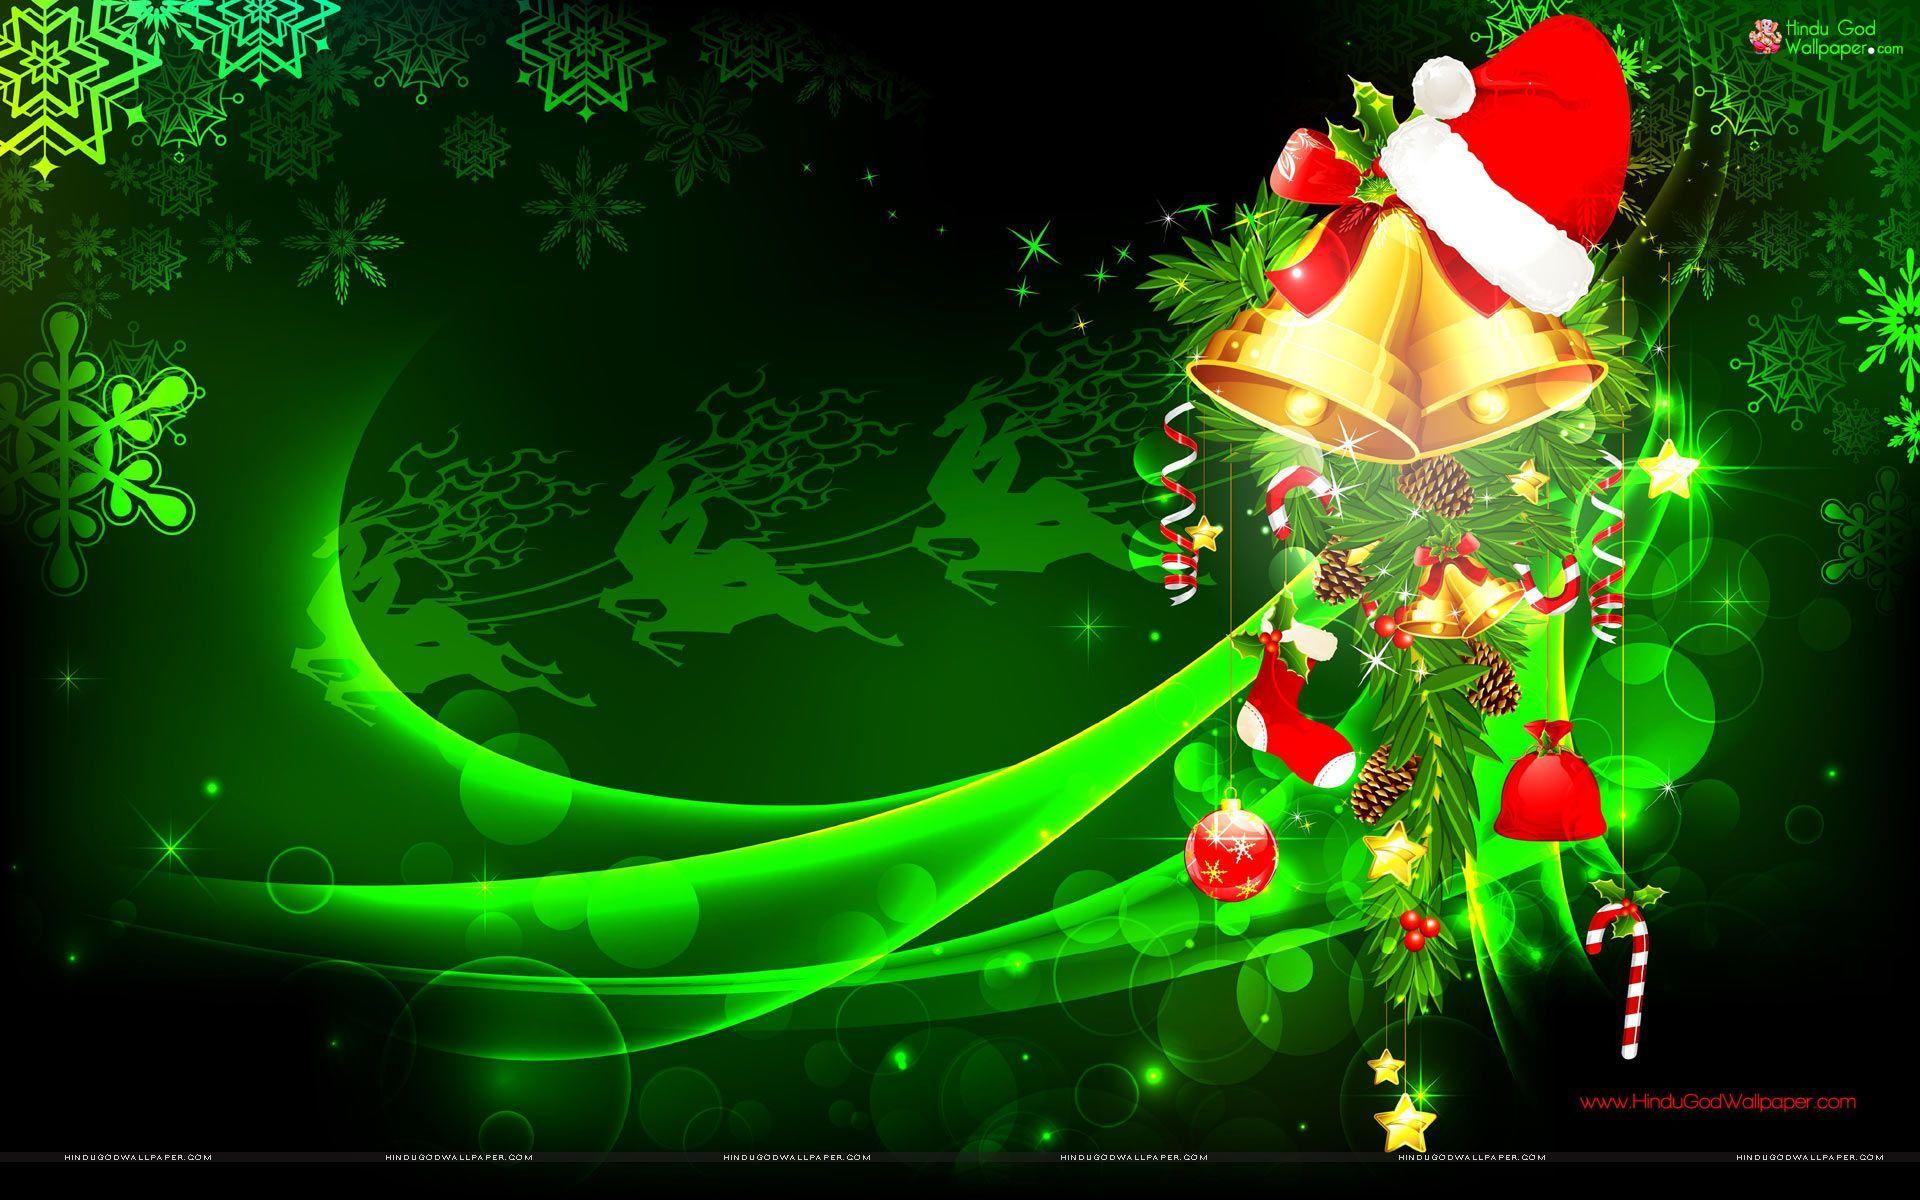 Green Christmas Wallpaper for Desktop Free Download. Christmas